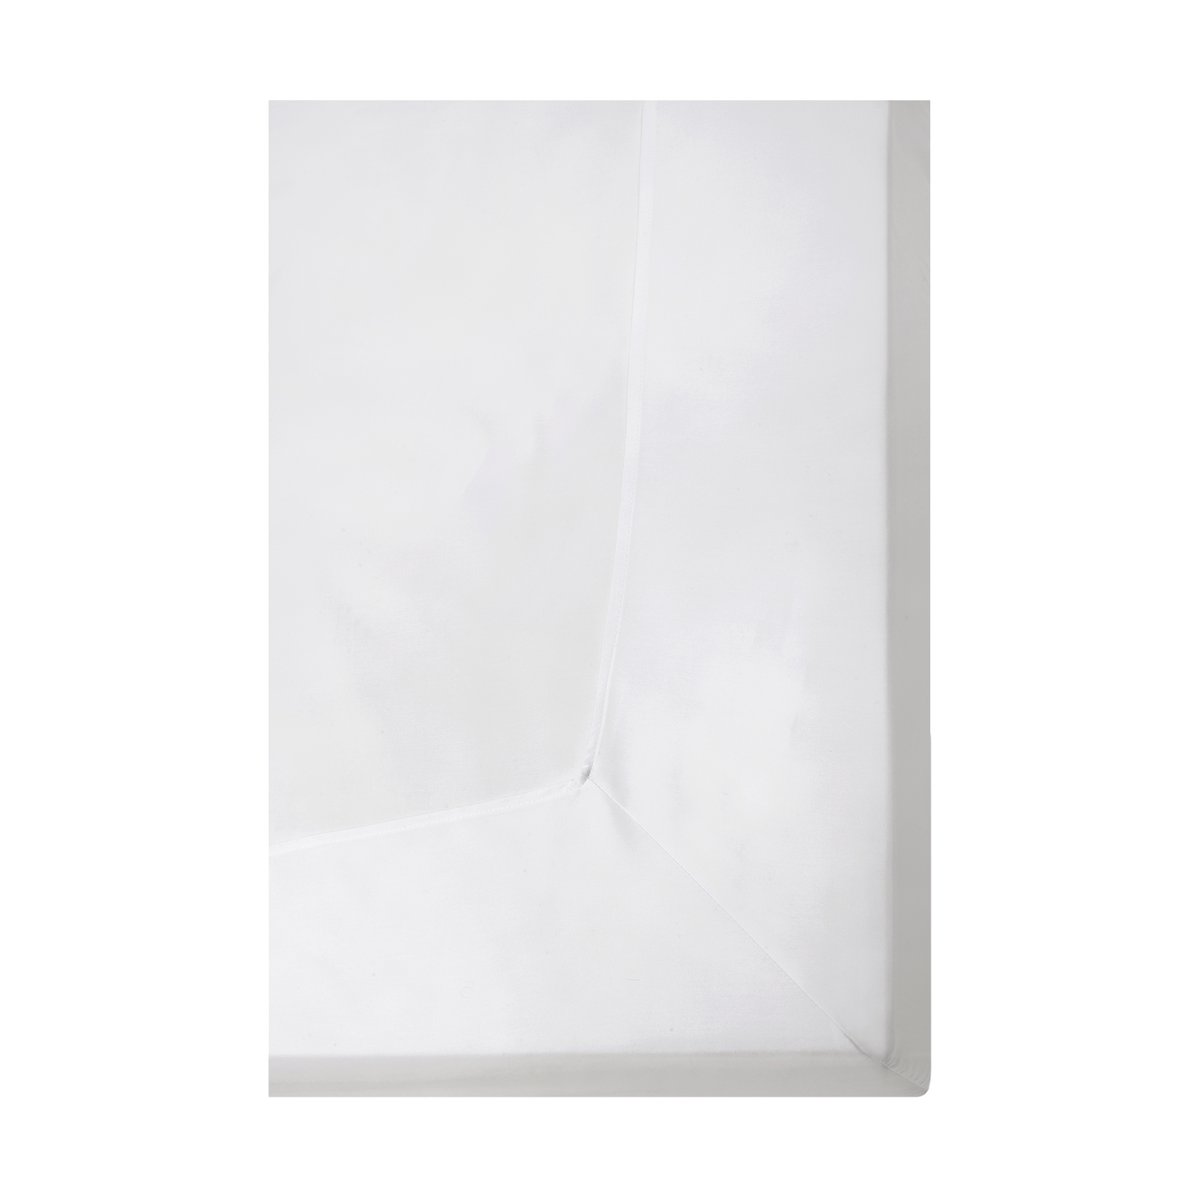 Himla Soul omslag genaaid hoeslaken 180x200 cm White